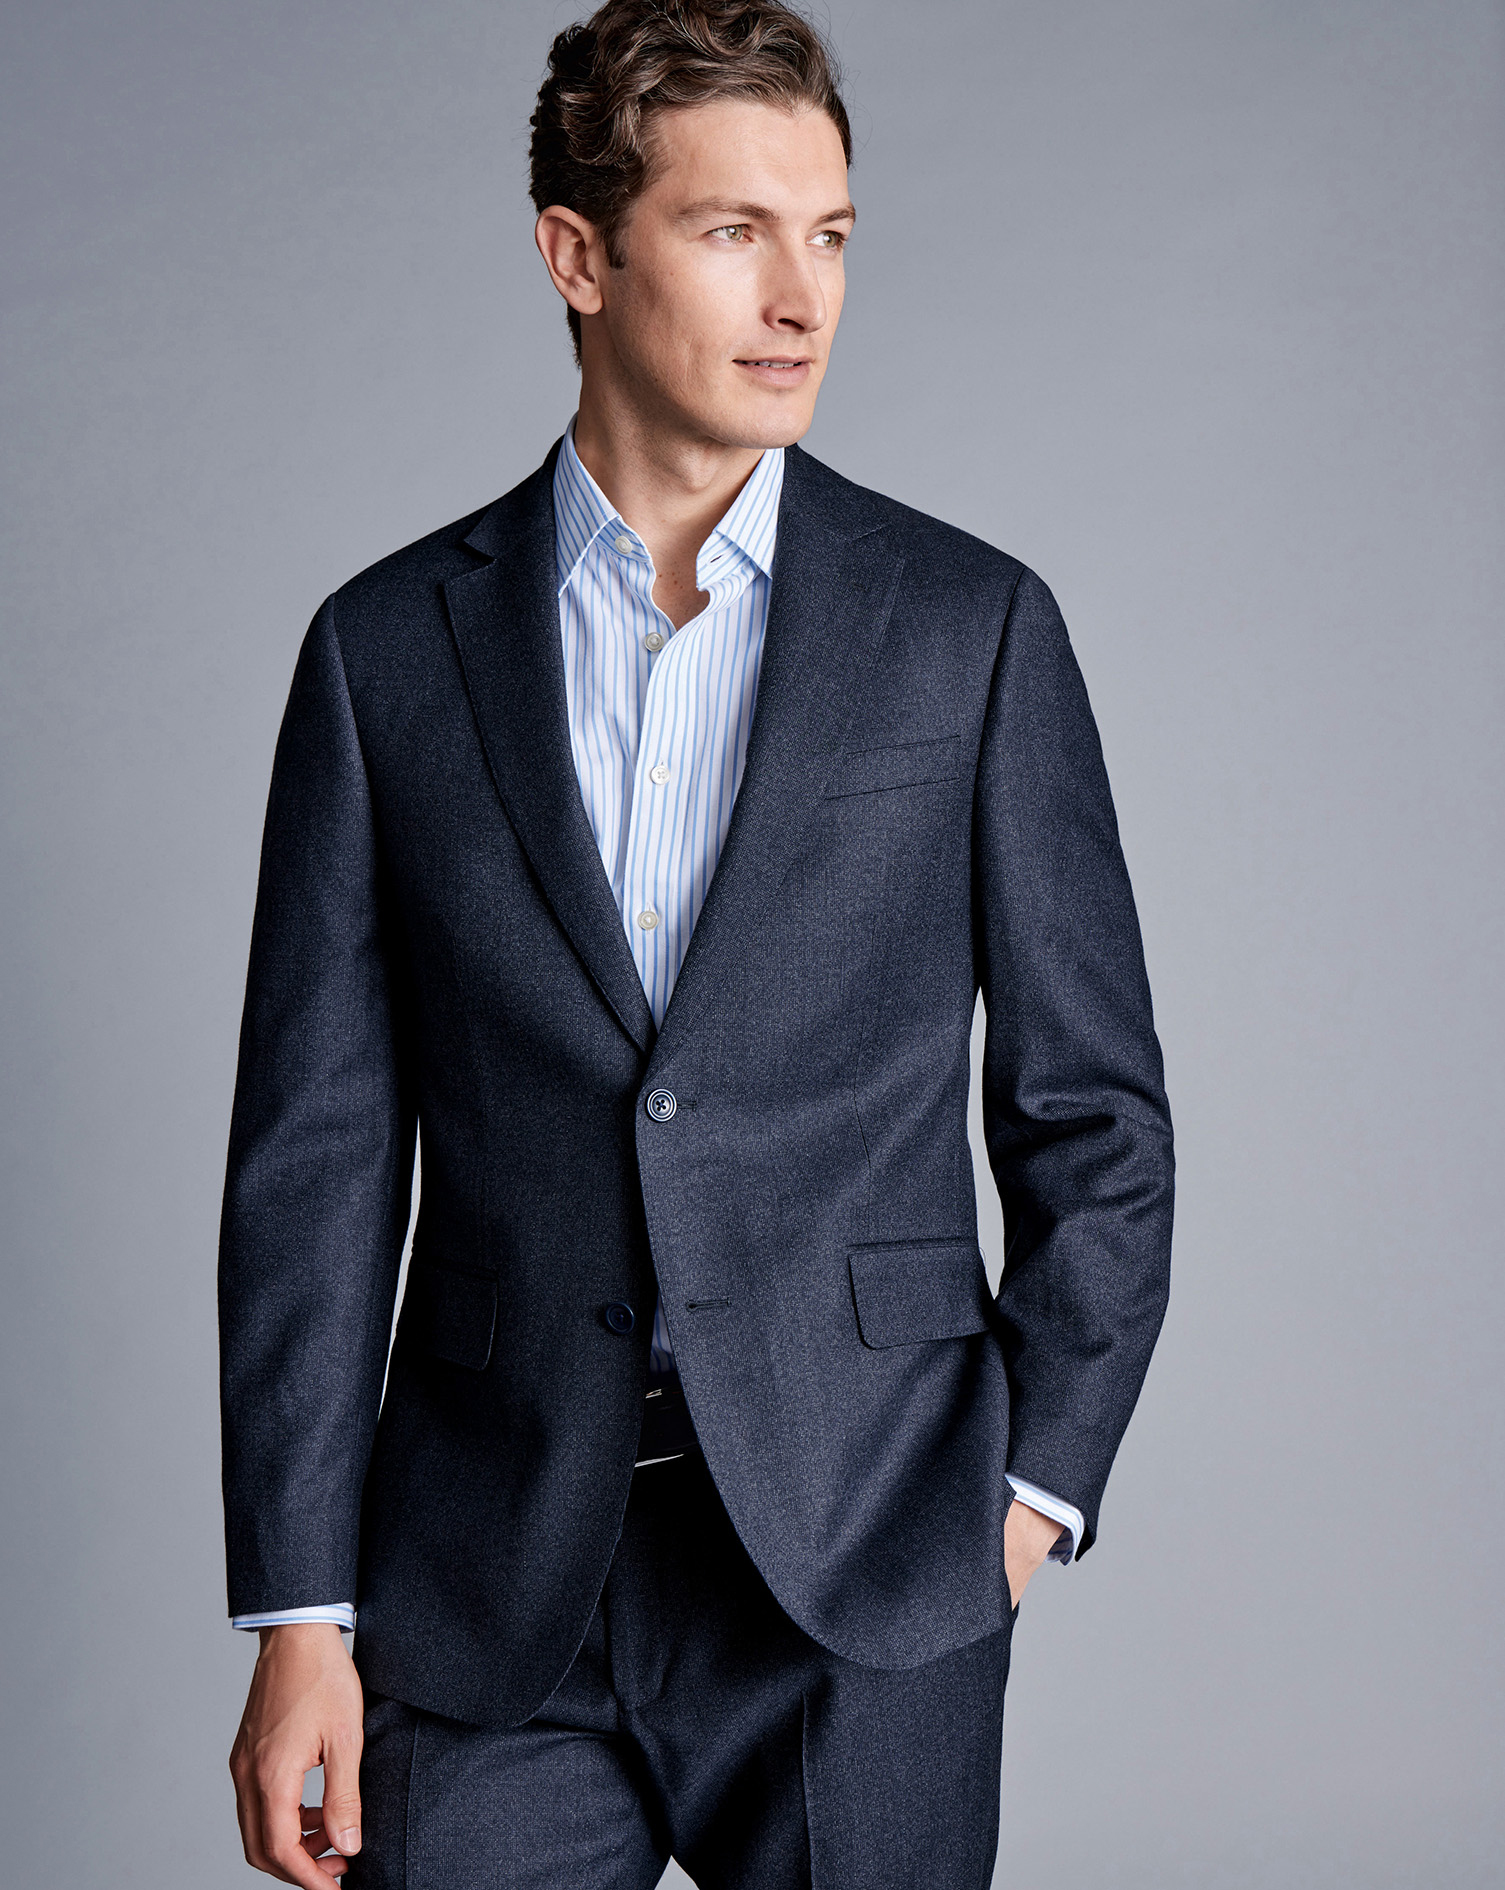 Men's Charles Tyrwhitt Italian Pindot Suit na Jacket - Denim Blue Size 38R Wool
